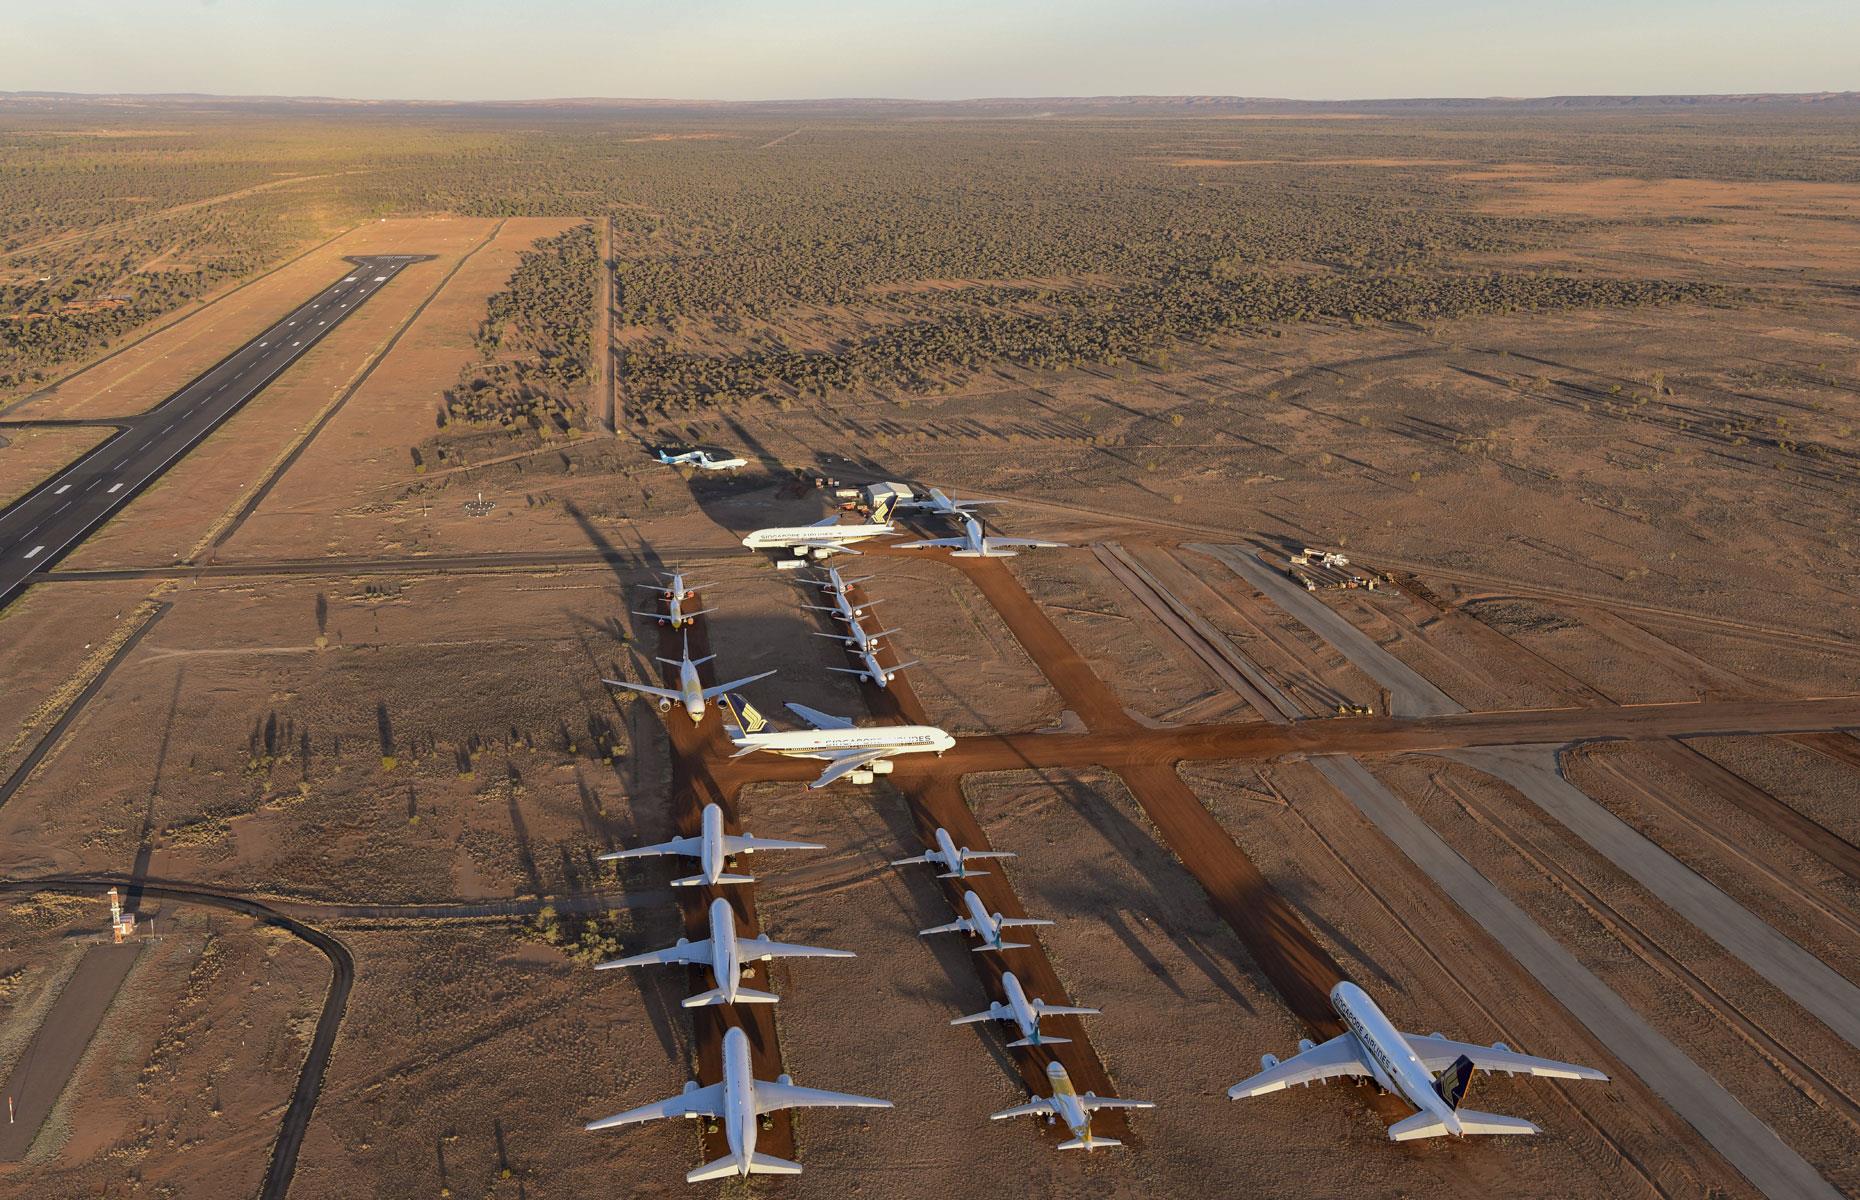 Asia Pacific Aircraft Storage, Northern Territory, Australia